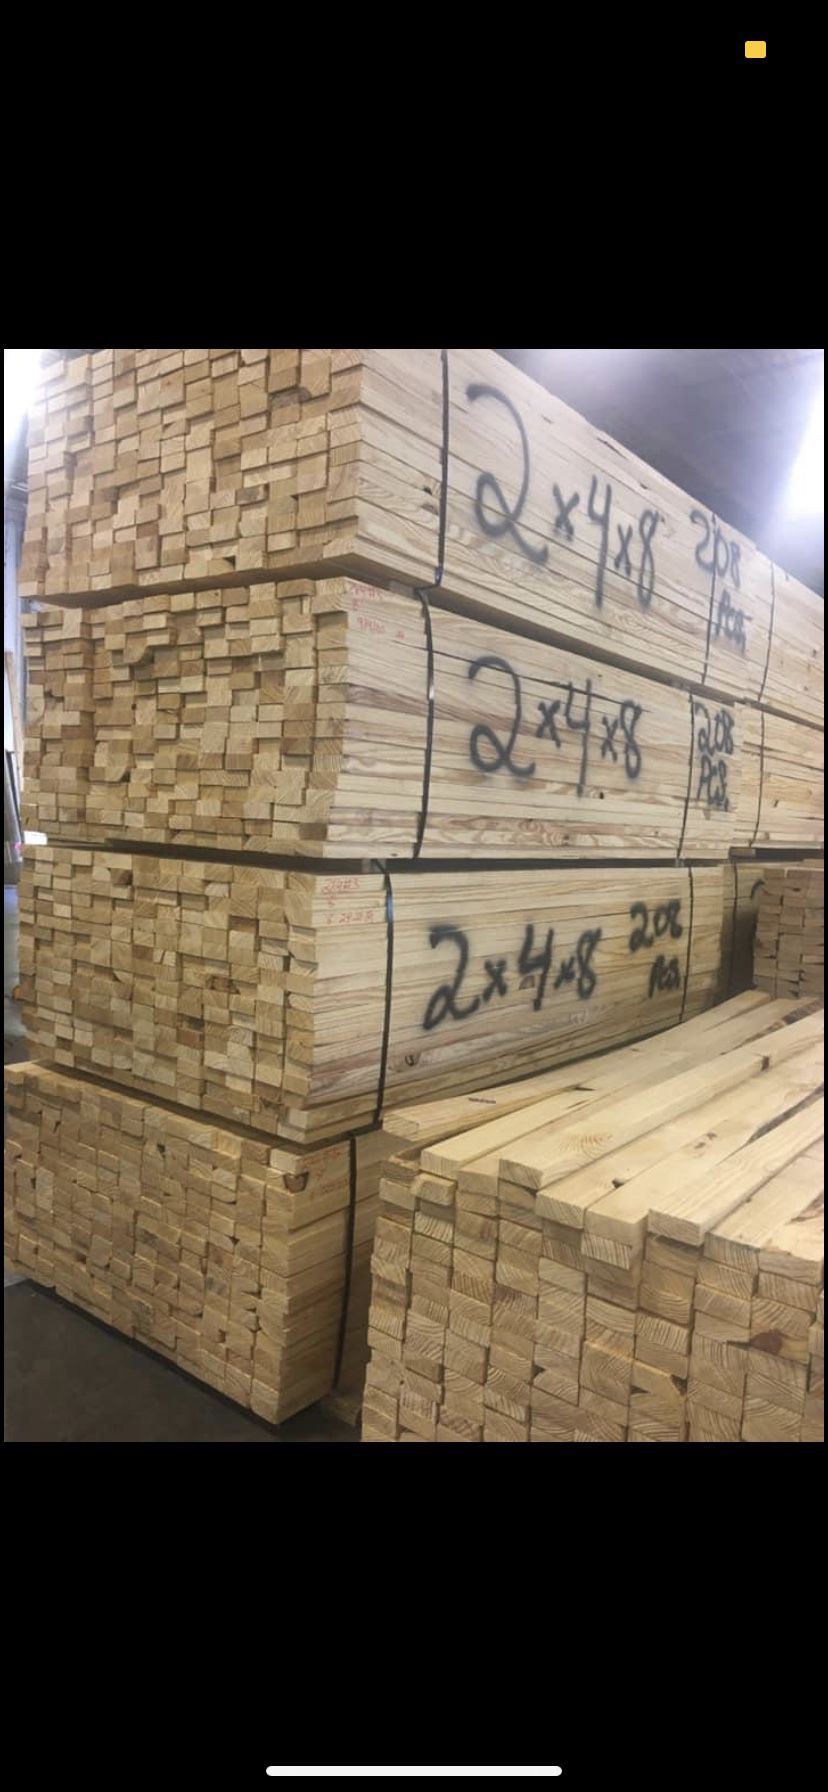 2x4x8 Lumber